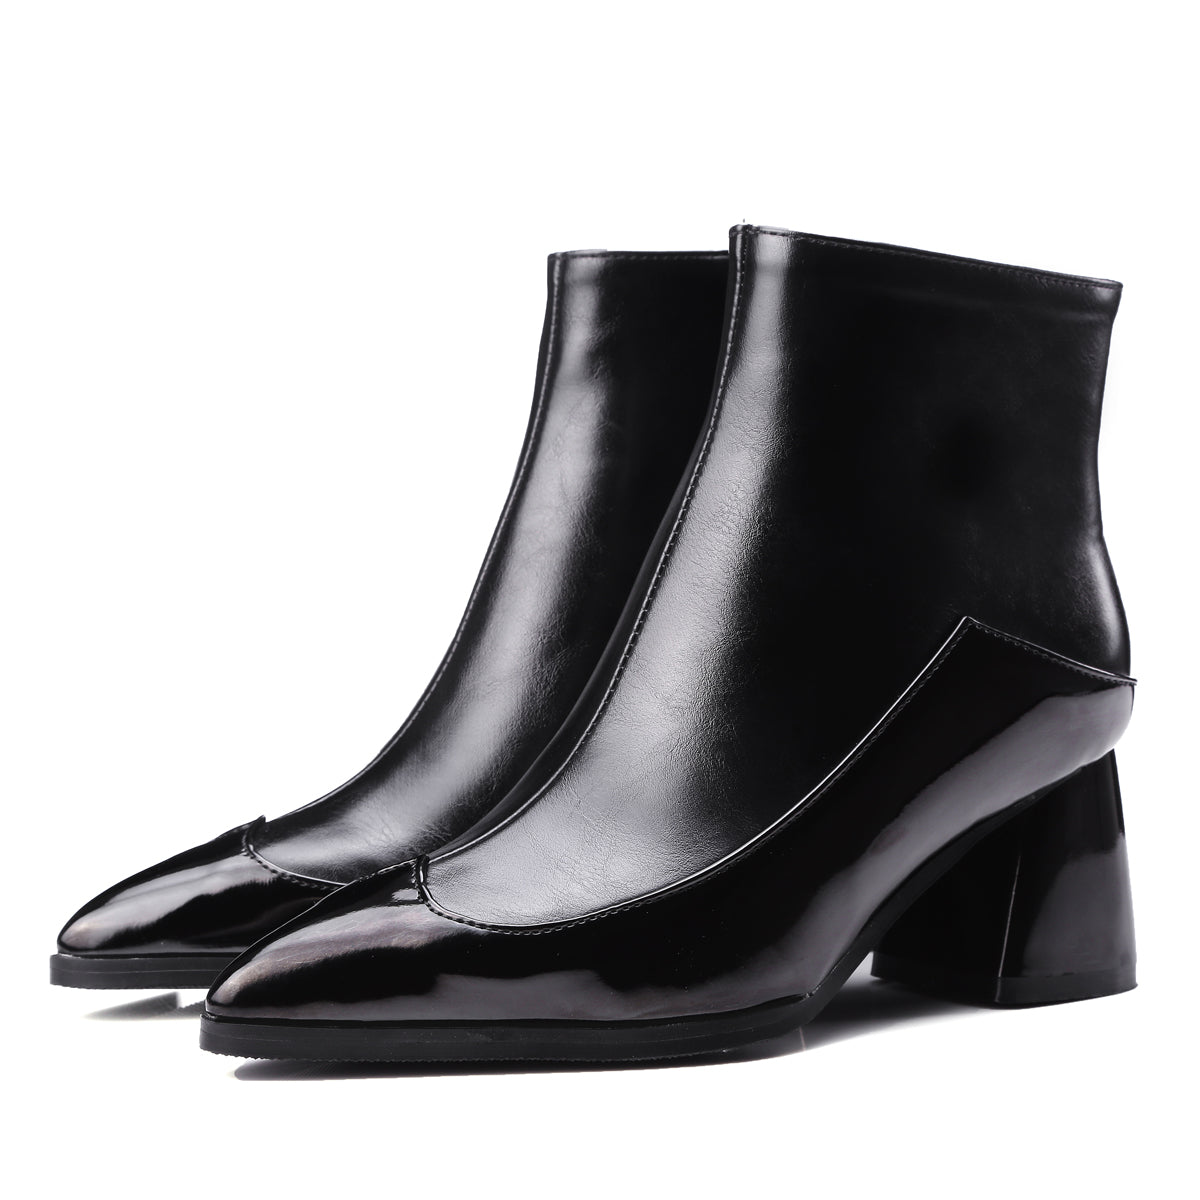 Bigsizeheels Bling shiny leather colorblock boots- Black/plus size boots